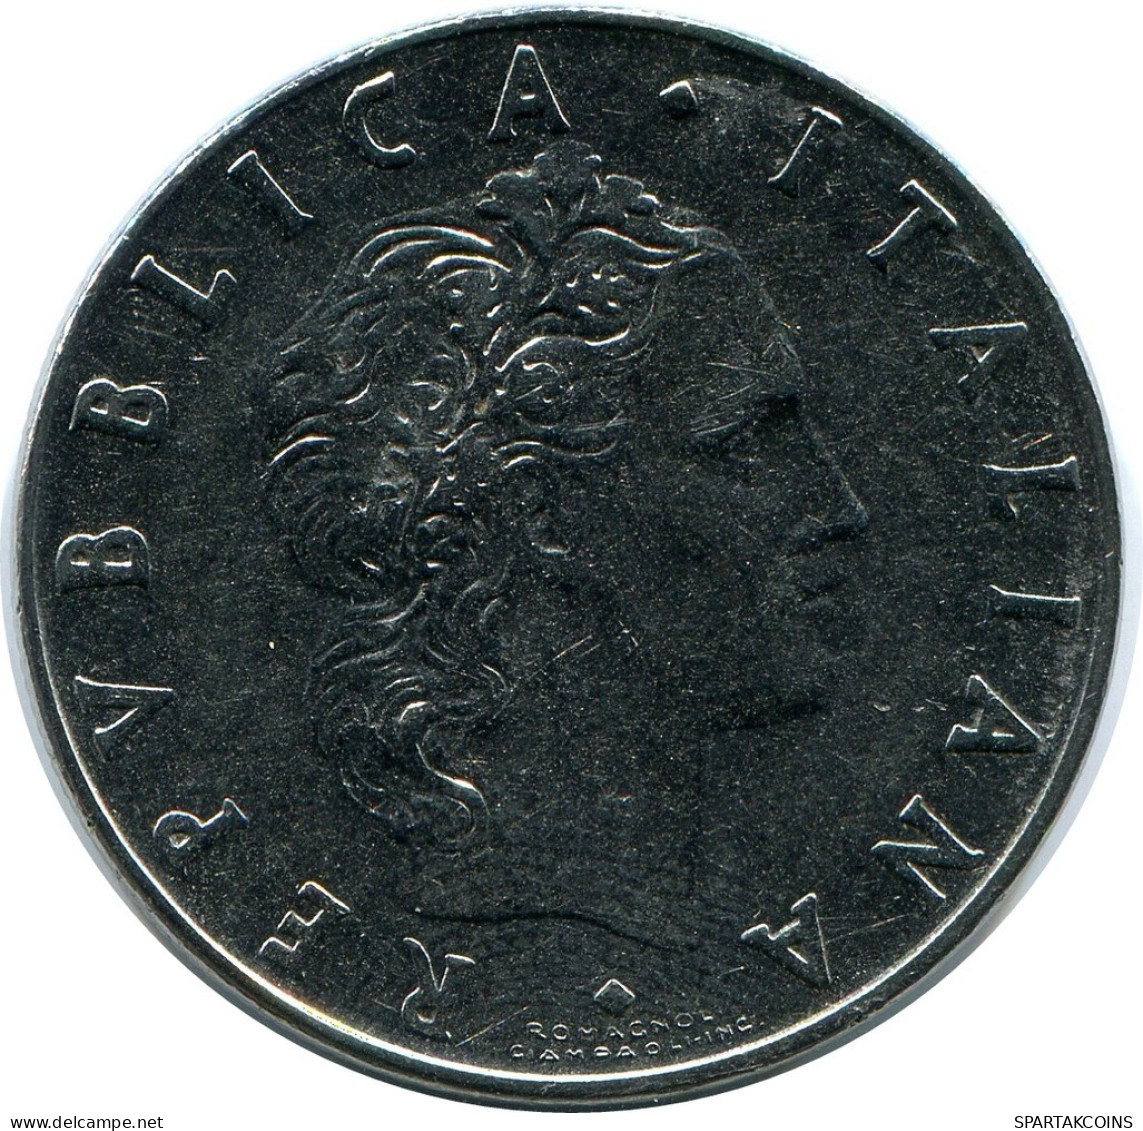 100 LIRE 1974 ITALY Coin #AZ492.U.A - 100 Lire